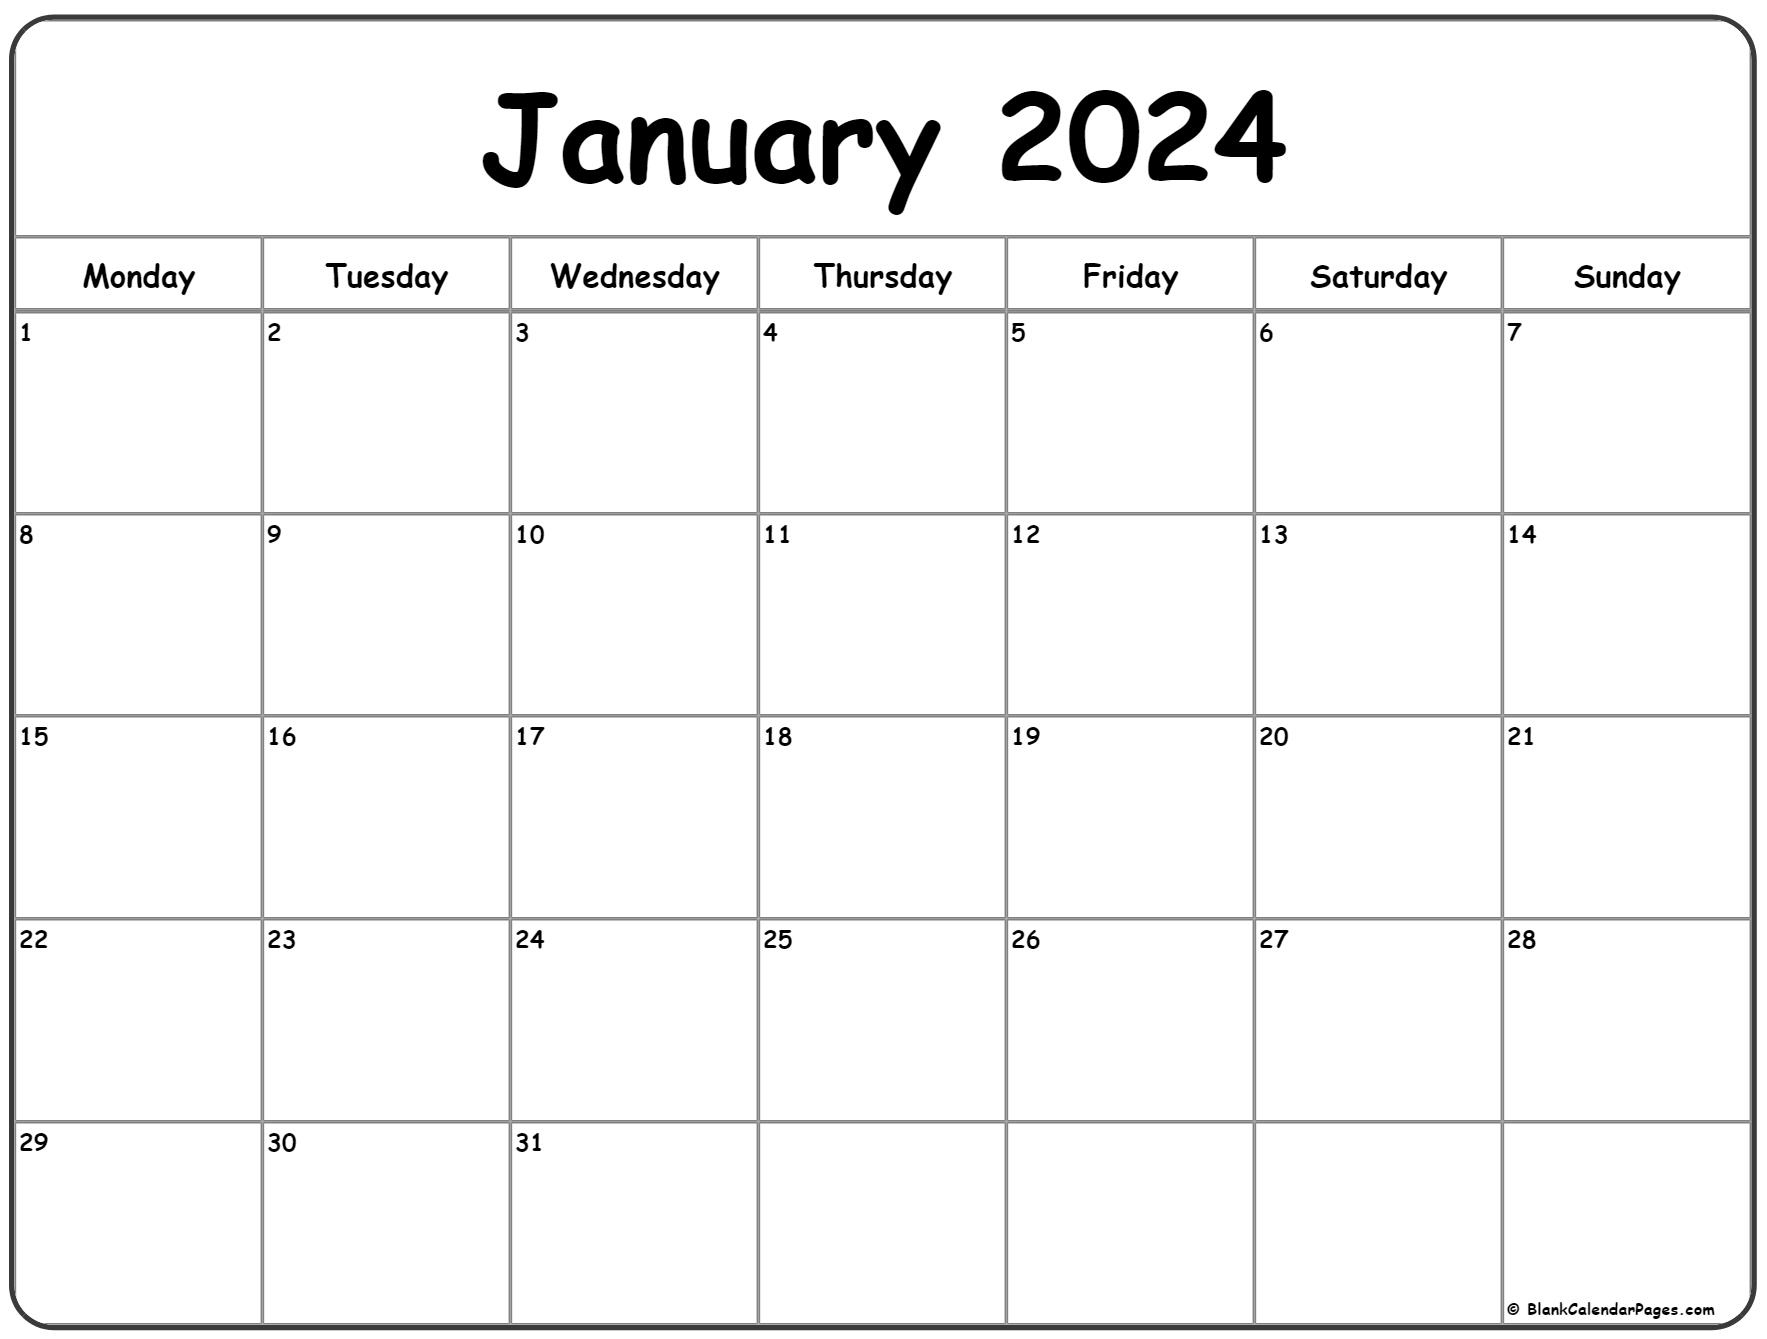 January 2024 Monday Calendar | Monday To Sunday | January 2024 To May 2024 Calendar